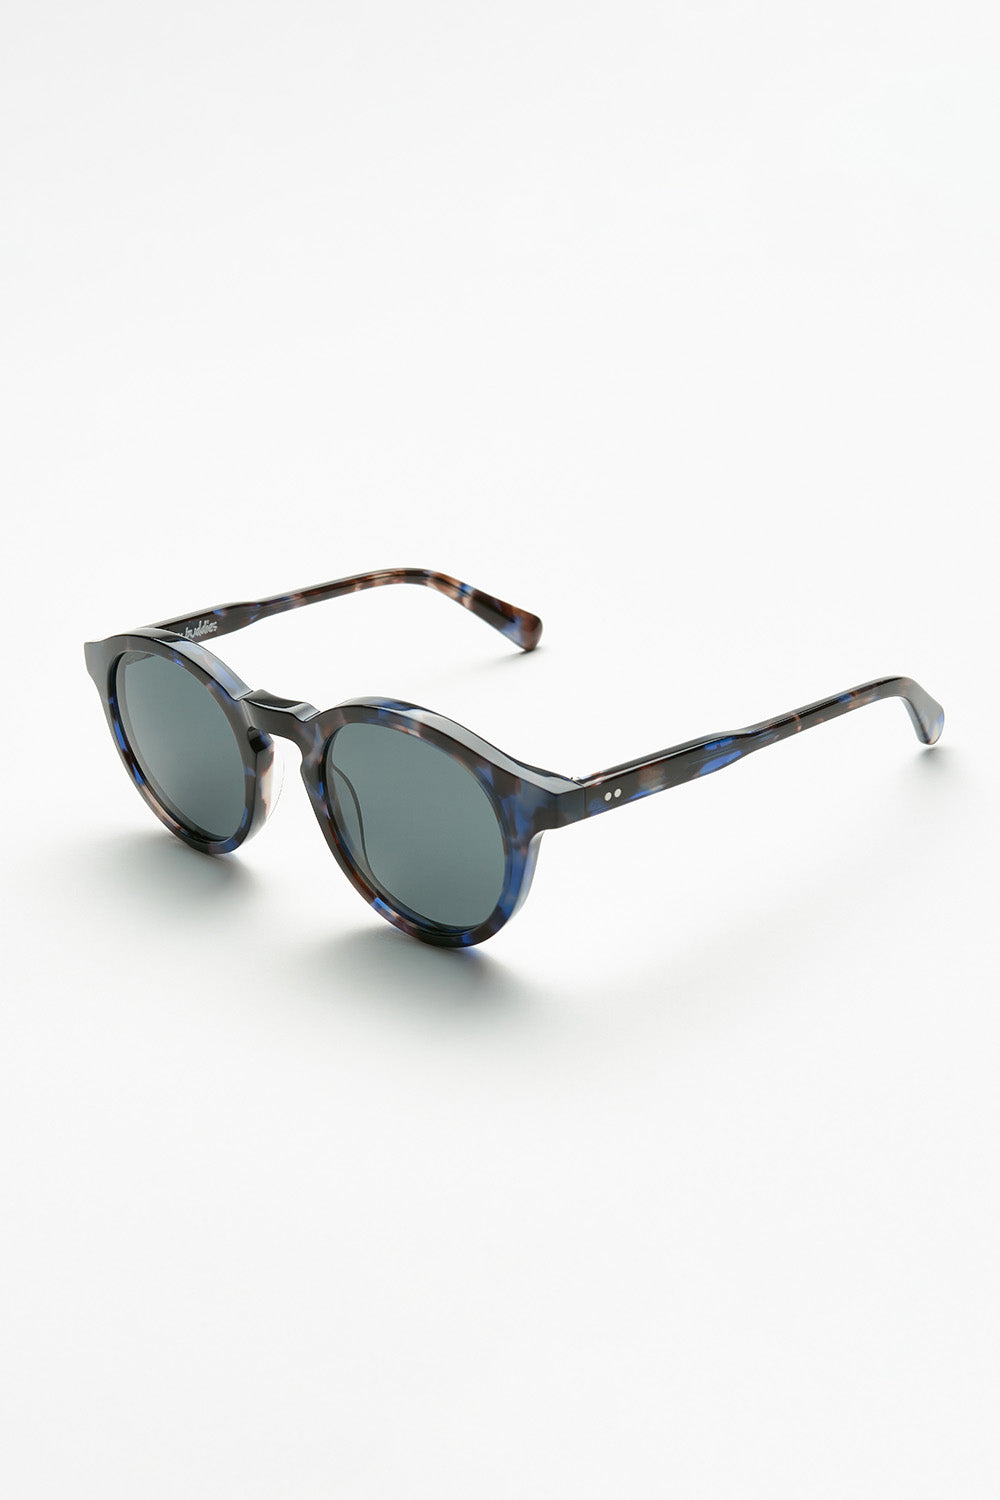 Abaco Burton Sunglasses in Silver/Deep Blue Mirror